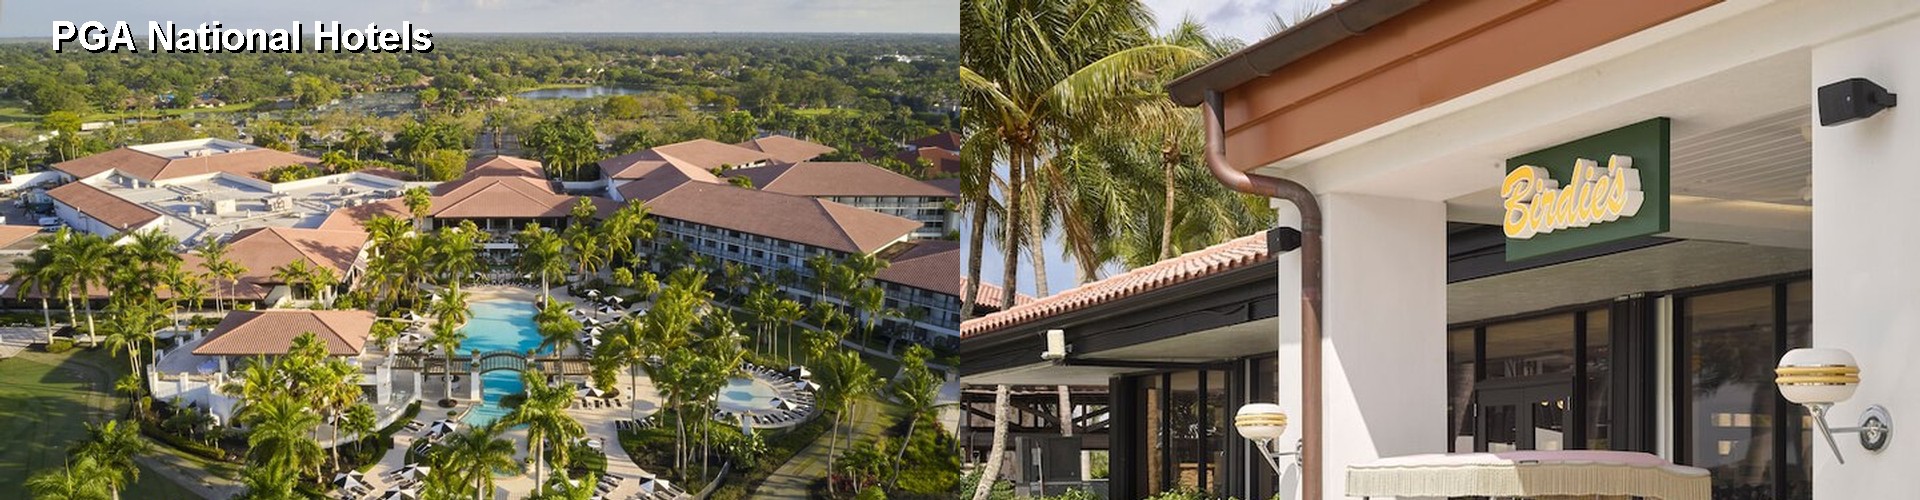 5 Best Hotels near PGA National